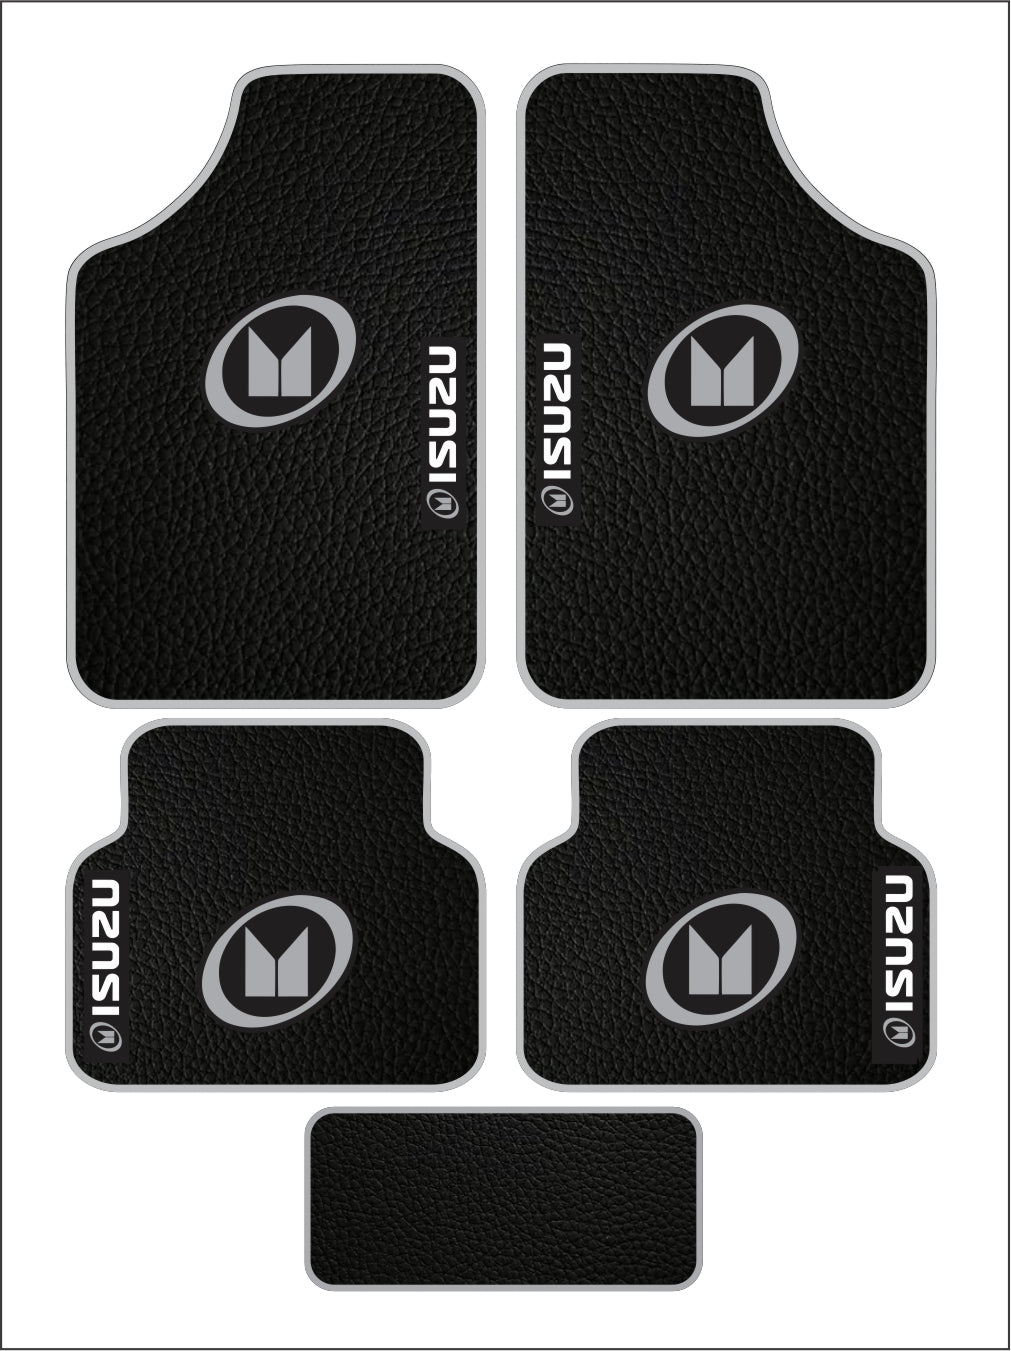 Isuzu Universal PVC Leather Floor Mats Set of 5